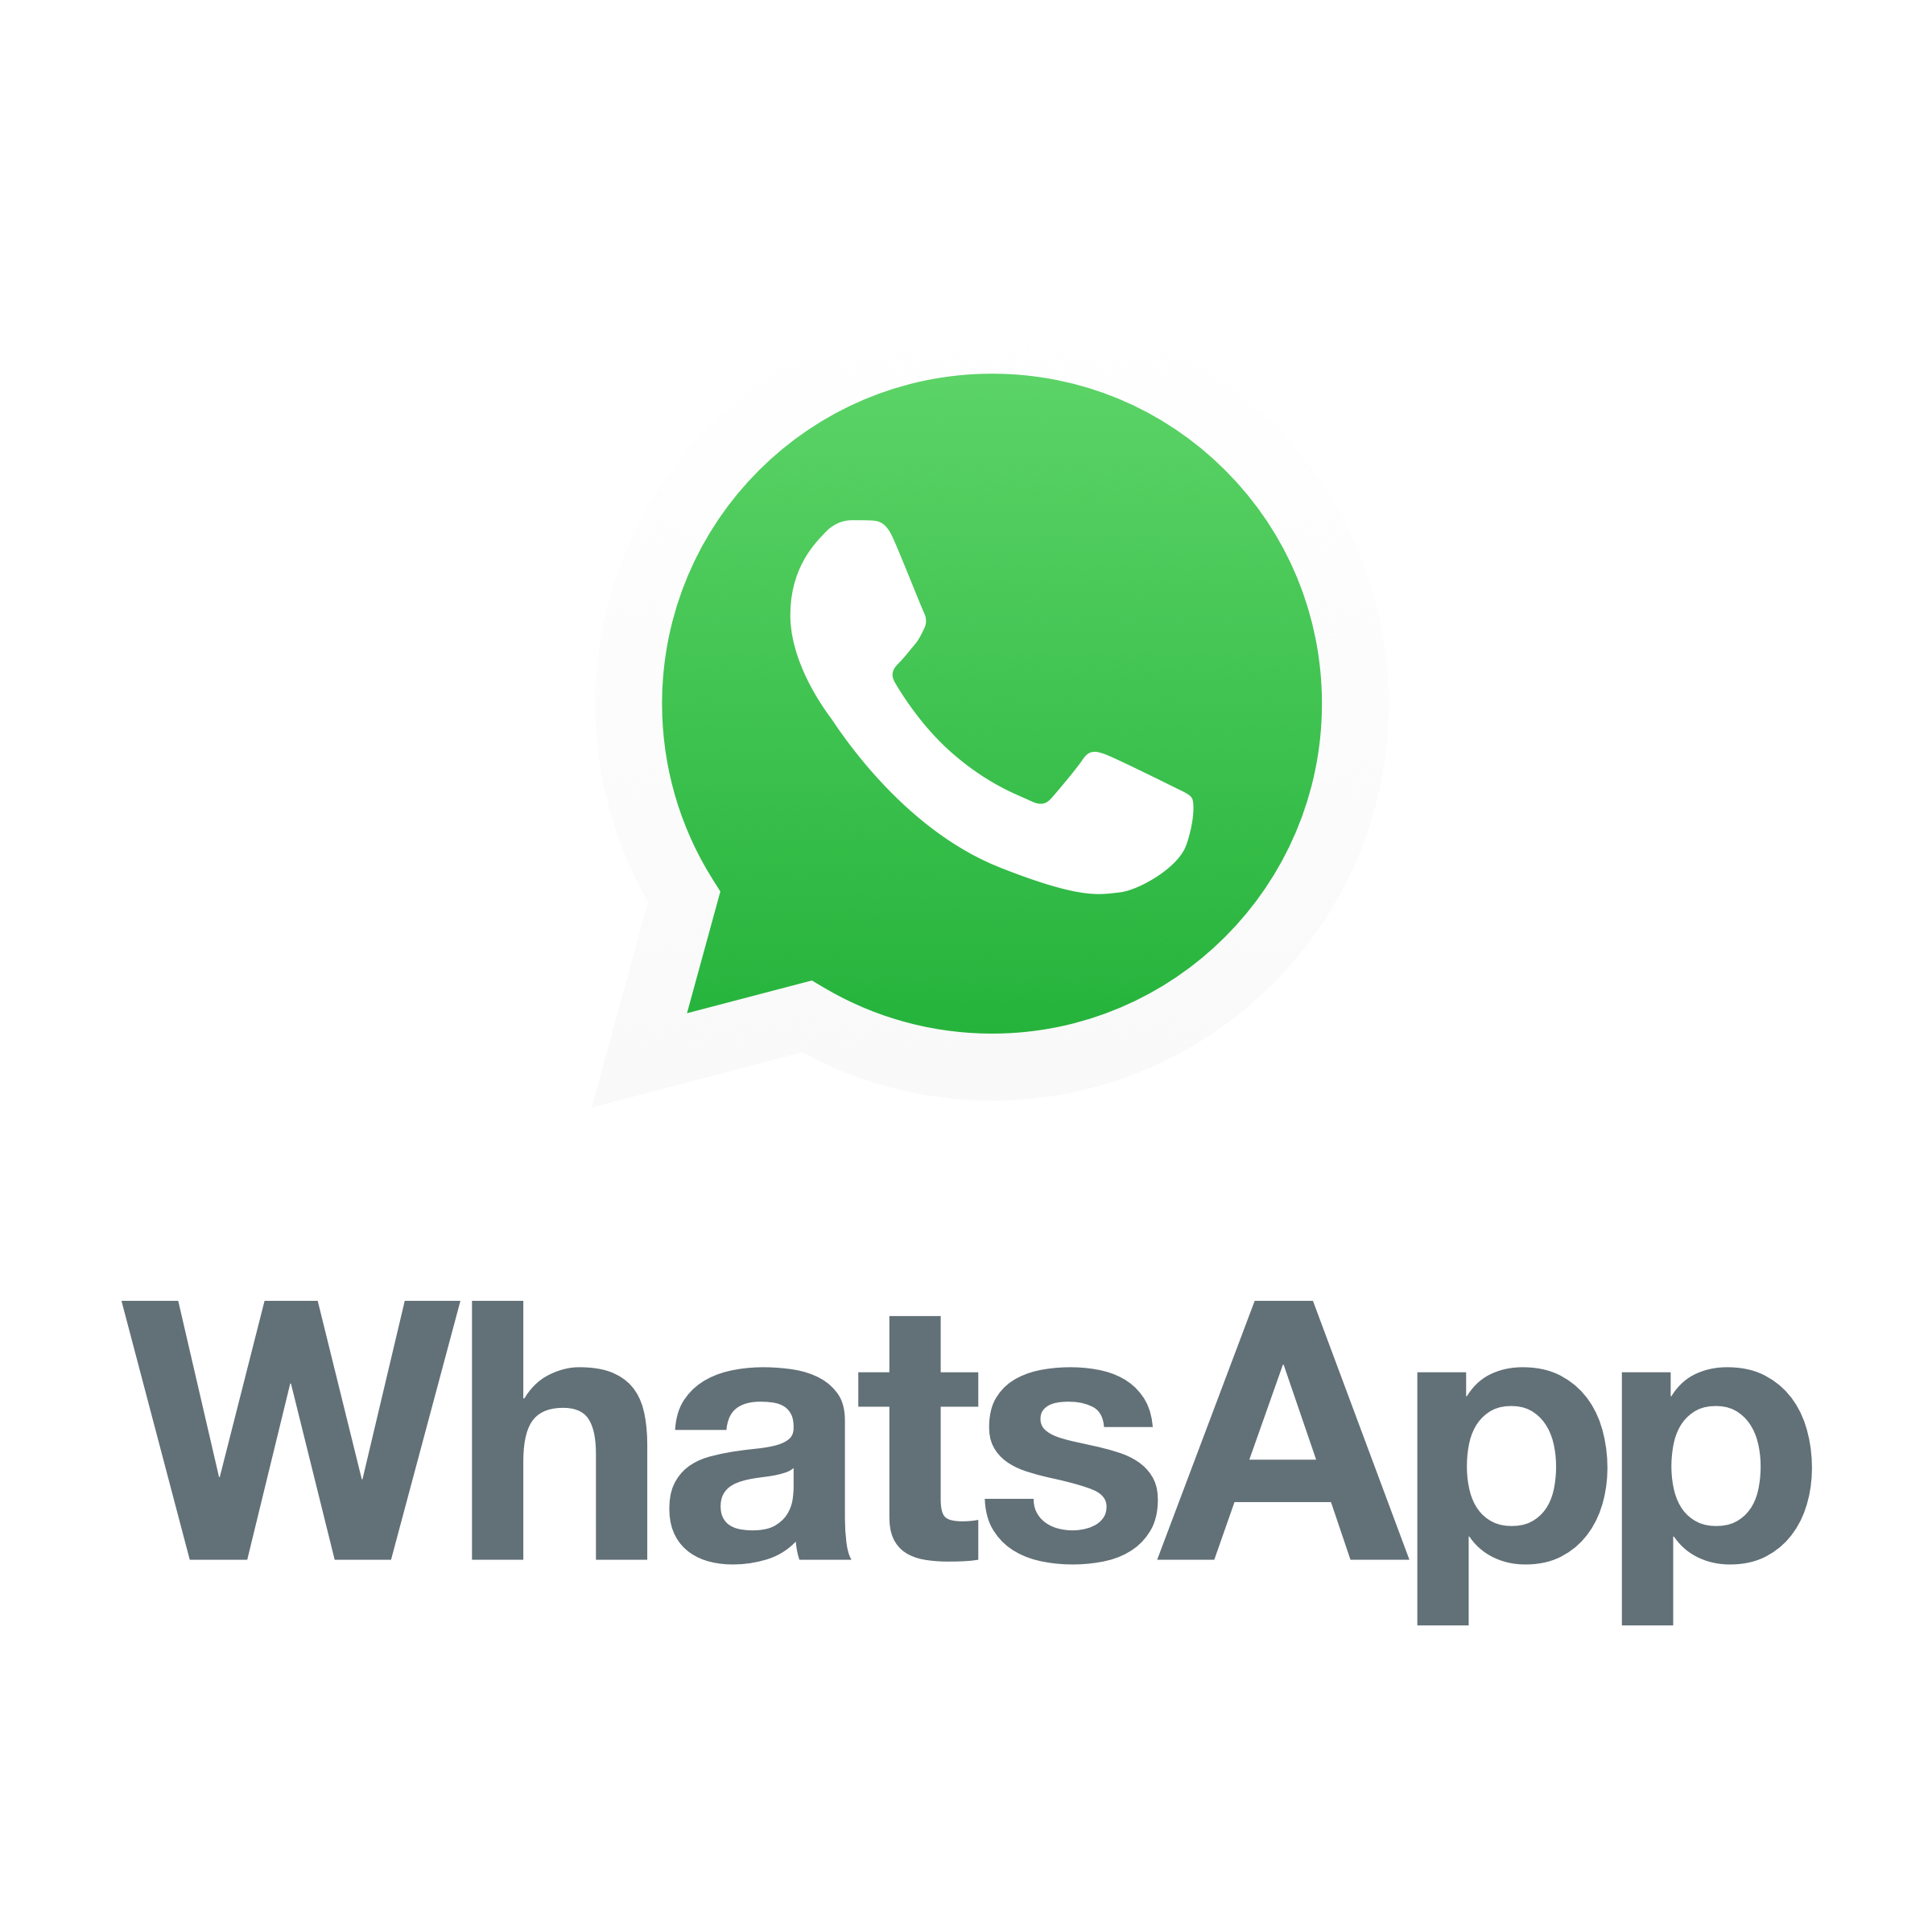 Apa Itu GB WhatsApp? Cara Download dan Install GB WhatsApp (GB WA), Link Download GB WhatsApp (GB WA), Cara Update GB WhatsApp (GB WA), Cara Menggunakan WhatsApp GB (WA GB), Kelebihan WhatsApp GB (WA GB), Kekurangan WhatsApp GB (WA GB)